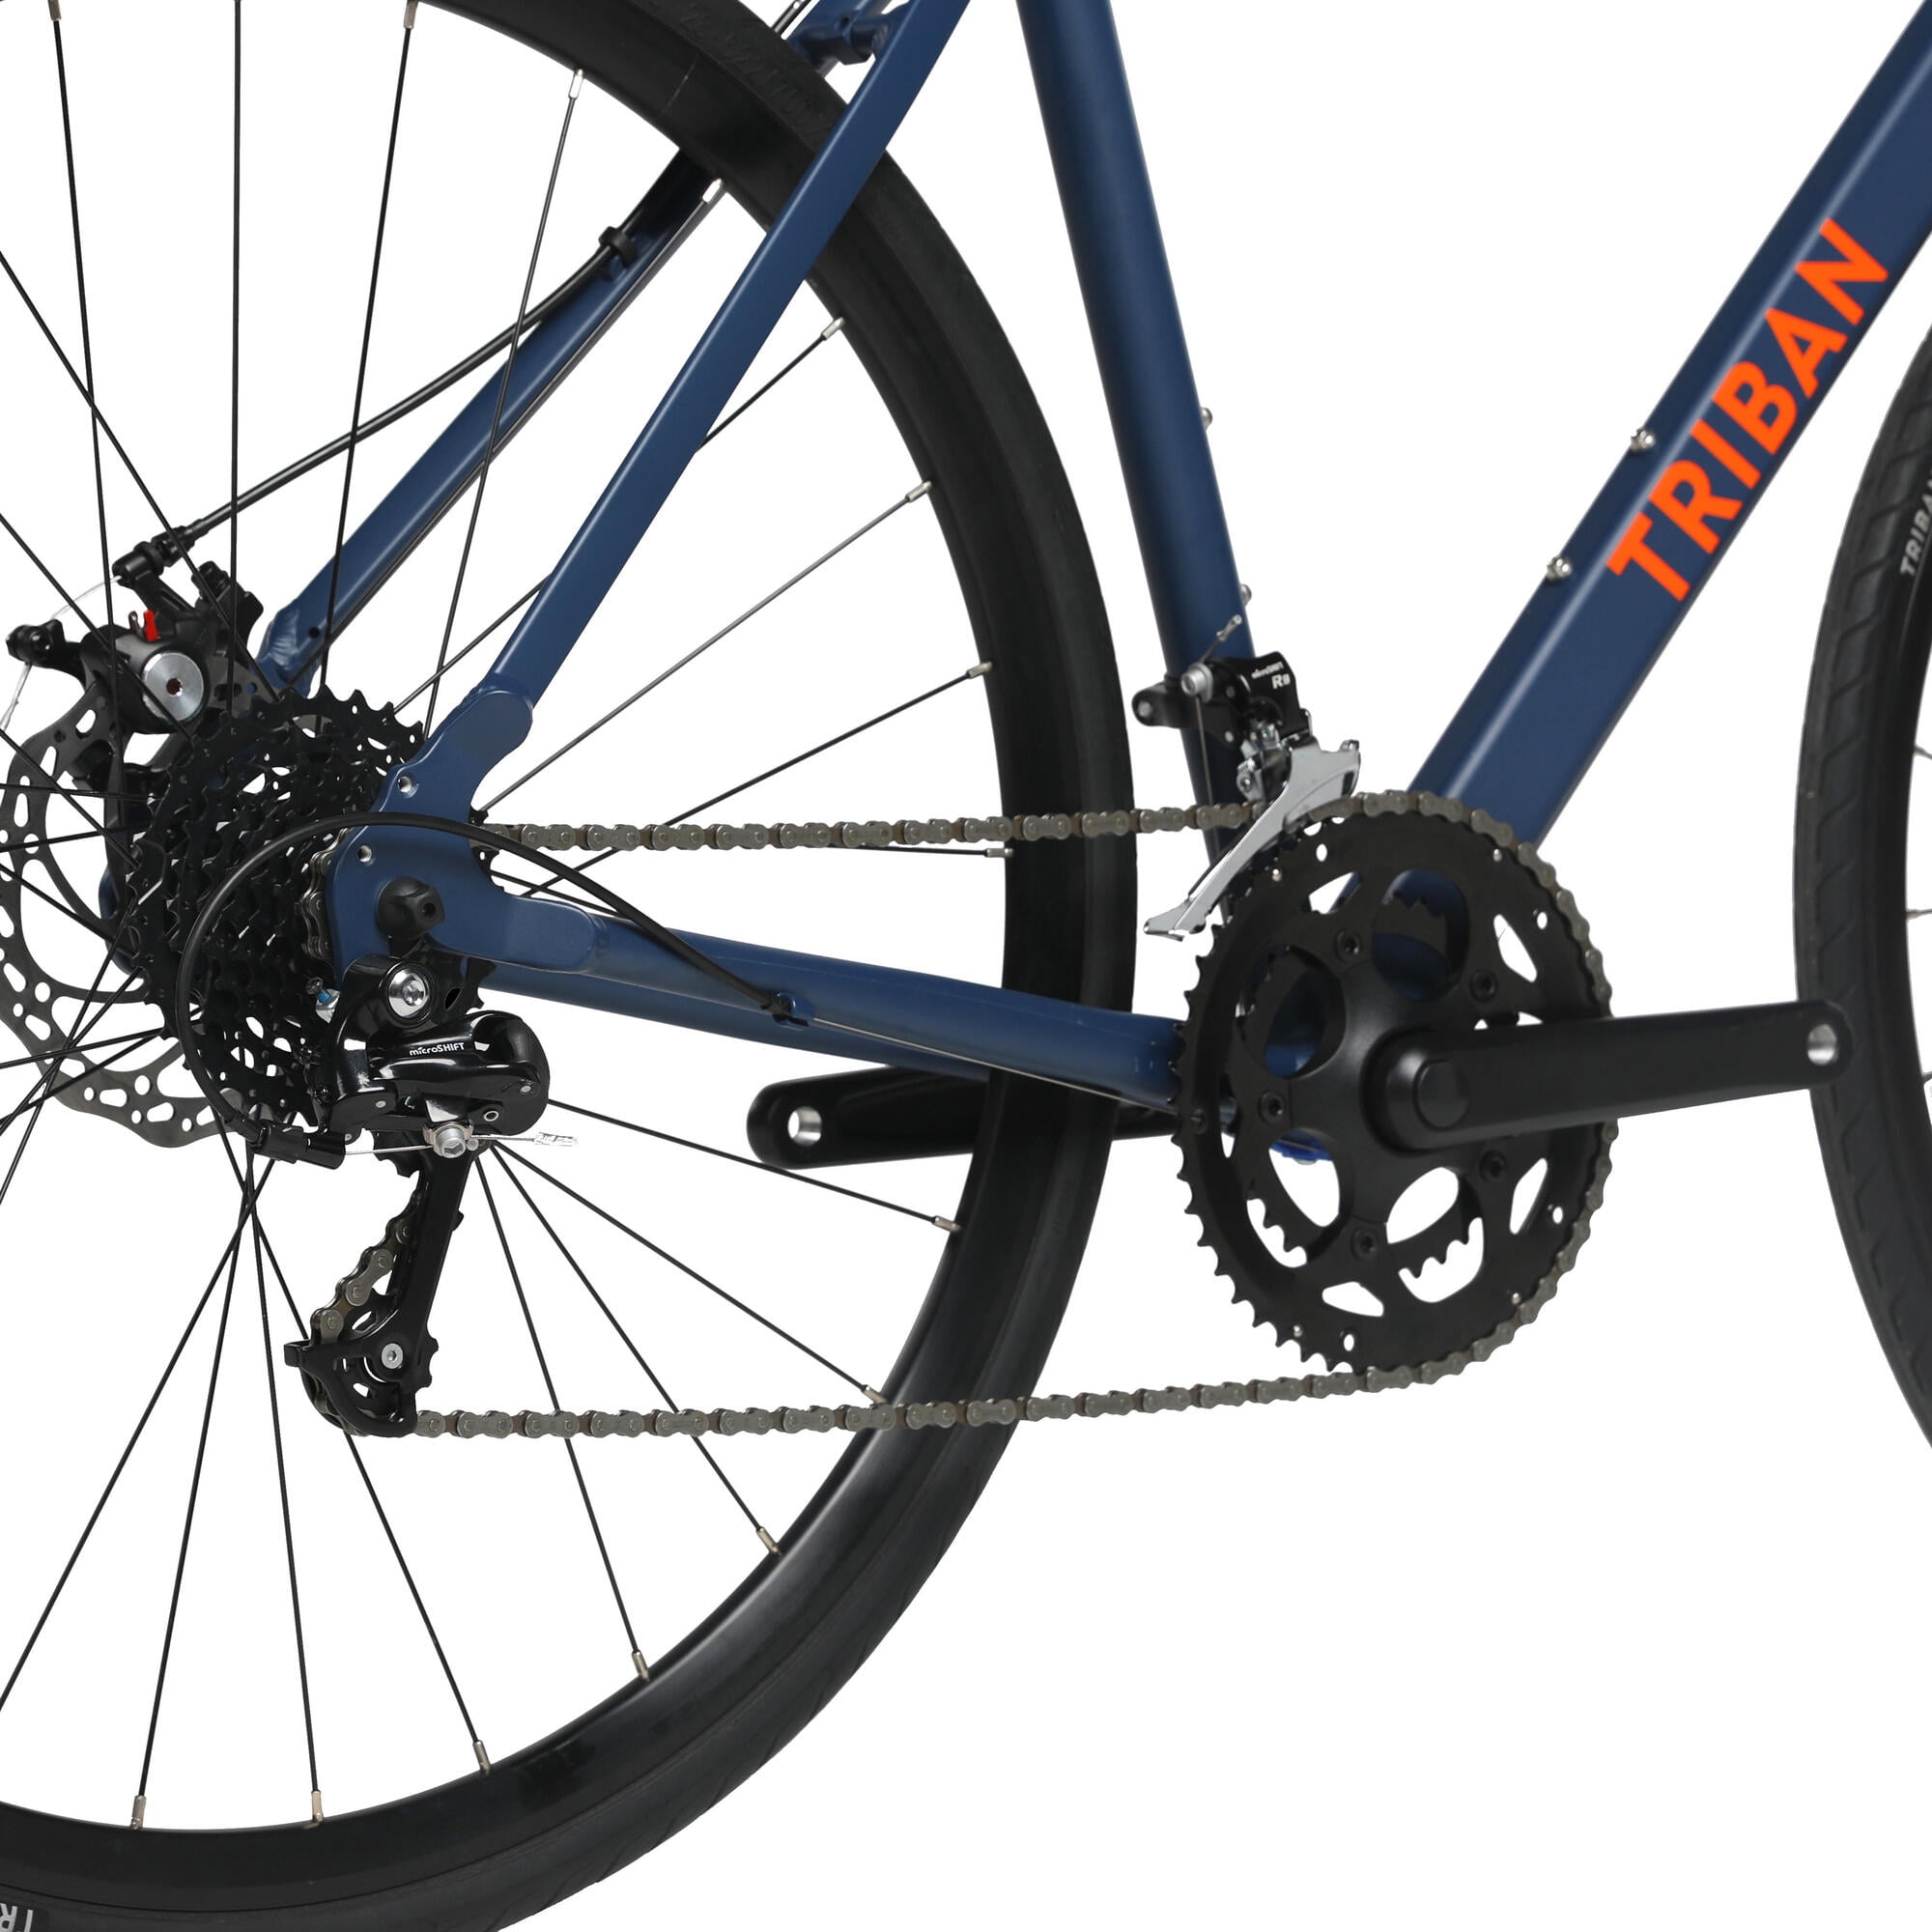 Decathlon Triban RC120, Aluminum Road Bike Flat Bar Disc Brakes, 700c, 16 Speed, Small, Blue